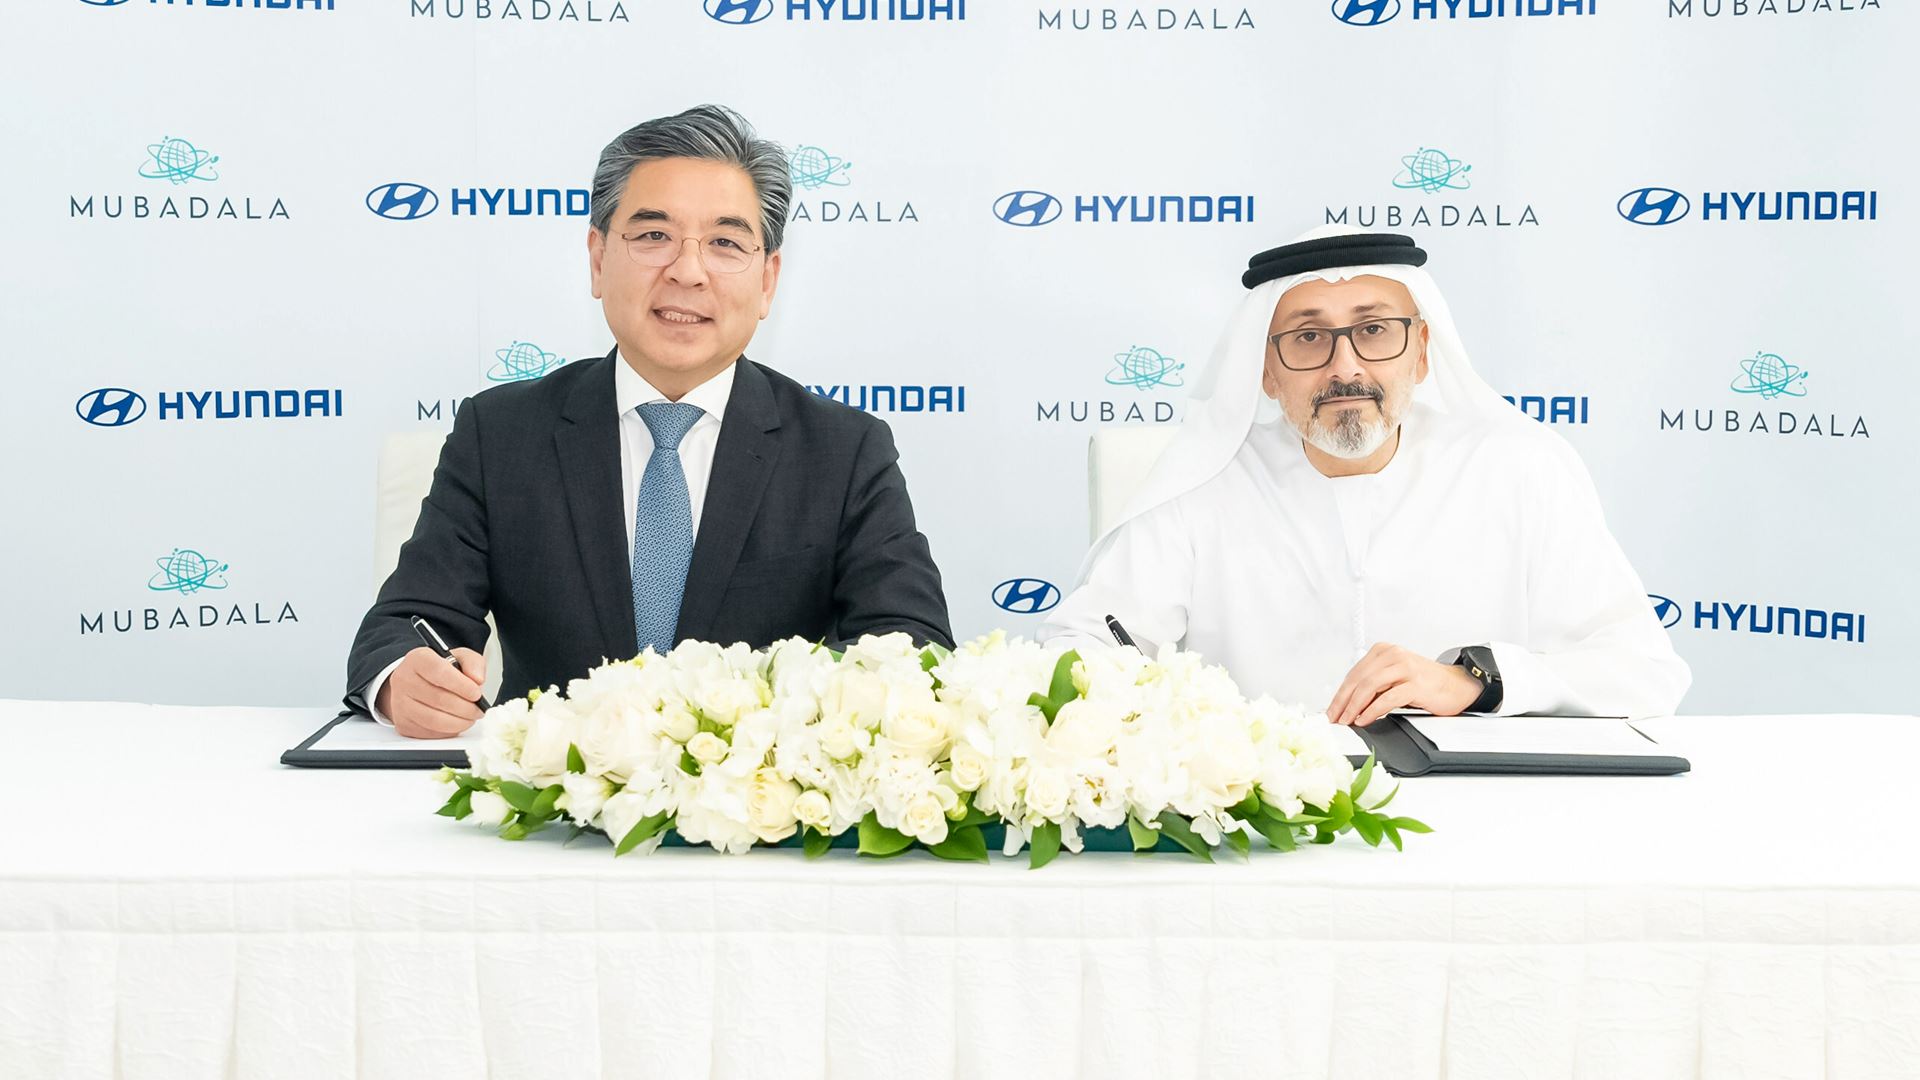 Hyundai Motor Abu Dhabi s Mubadala to Collaborate